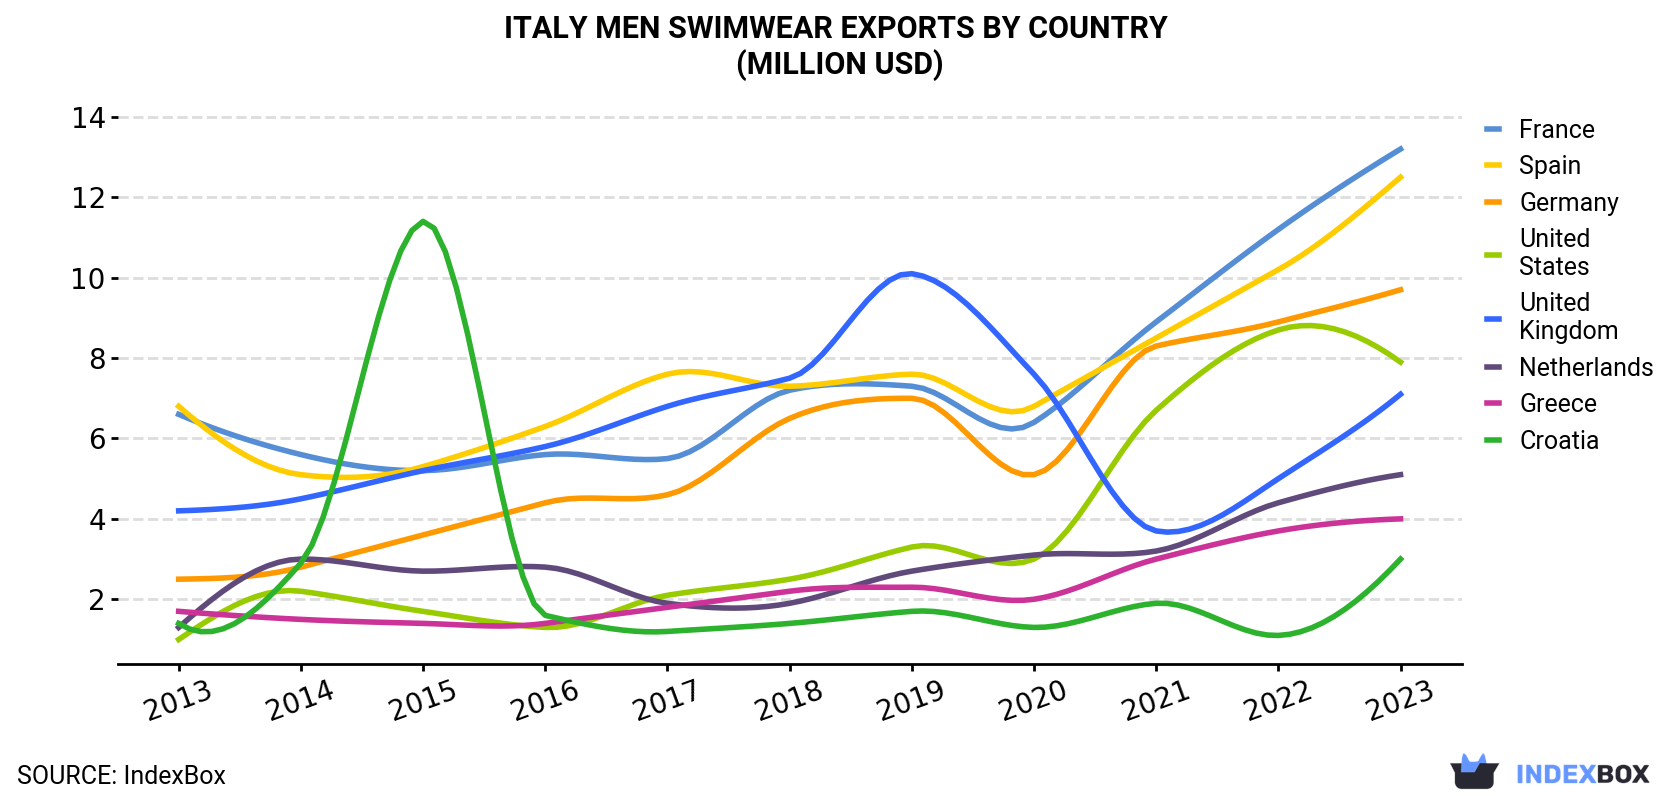 Italy Men Swimwear Exports By Country (Million USD)